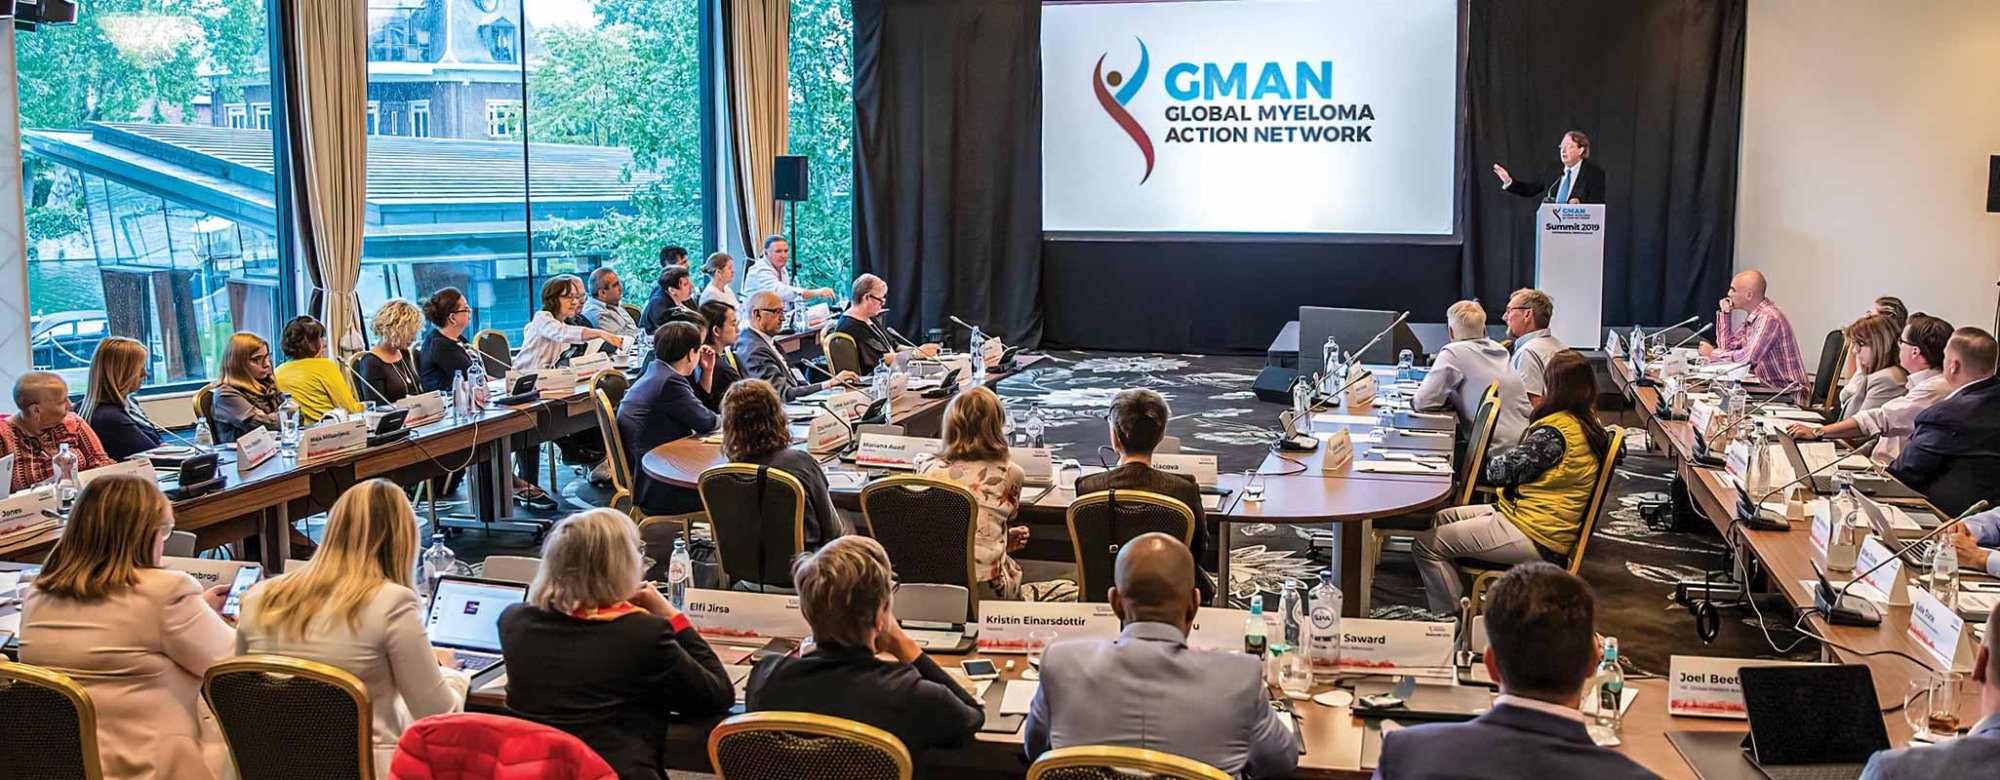 gman meeting summit